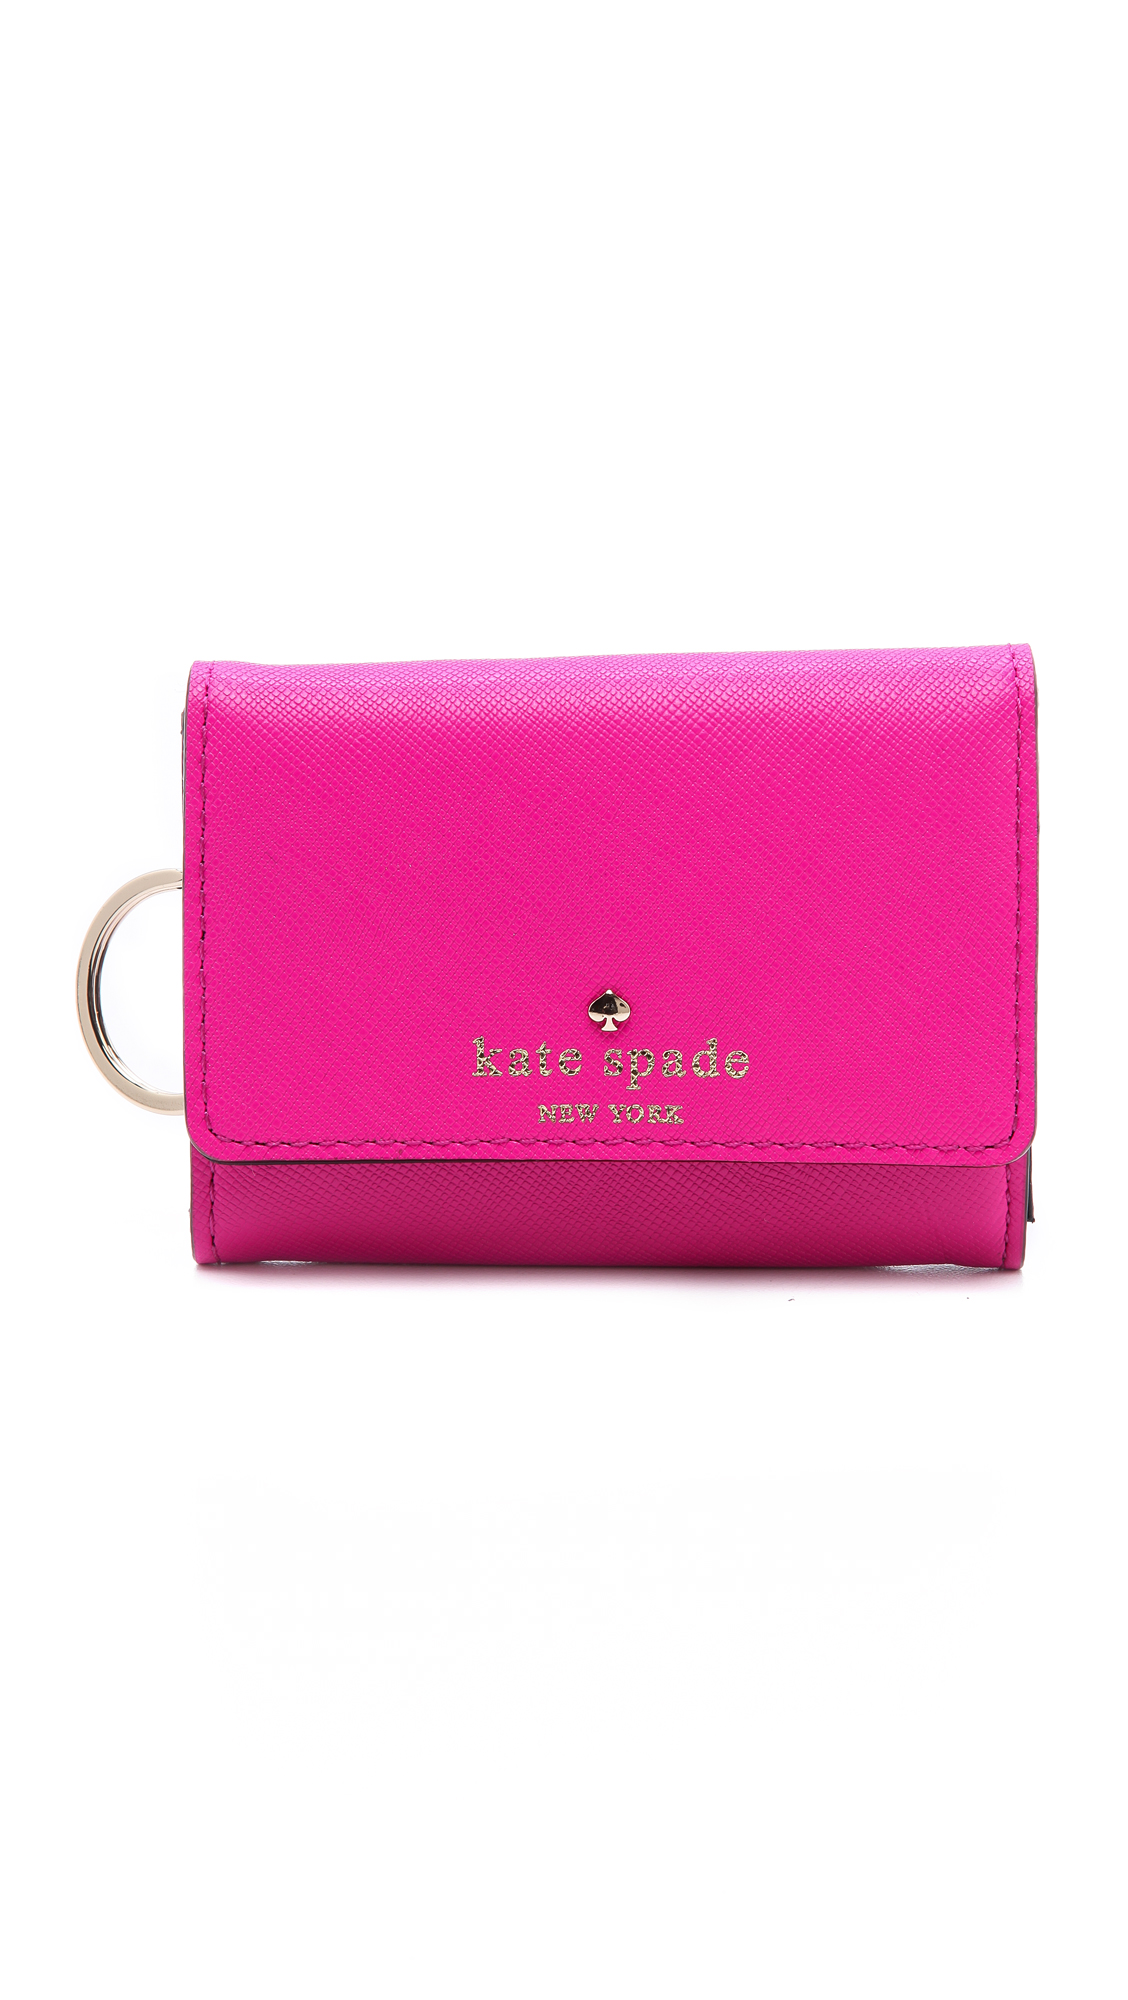 Kate Spade Cherry Lane Darla Wallet in Pink (Vivid Snapdragon) | Lyst